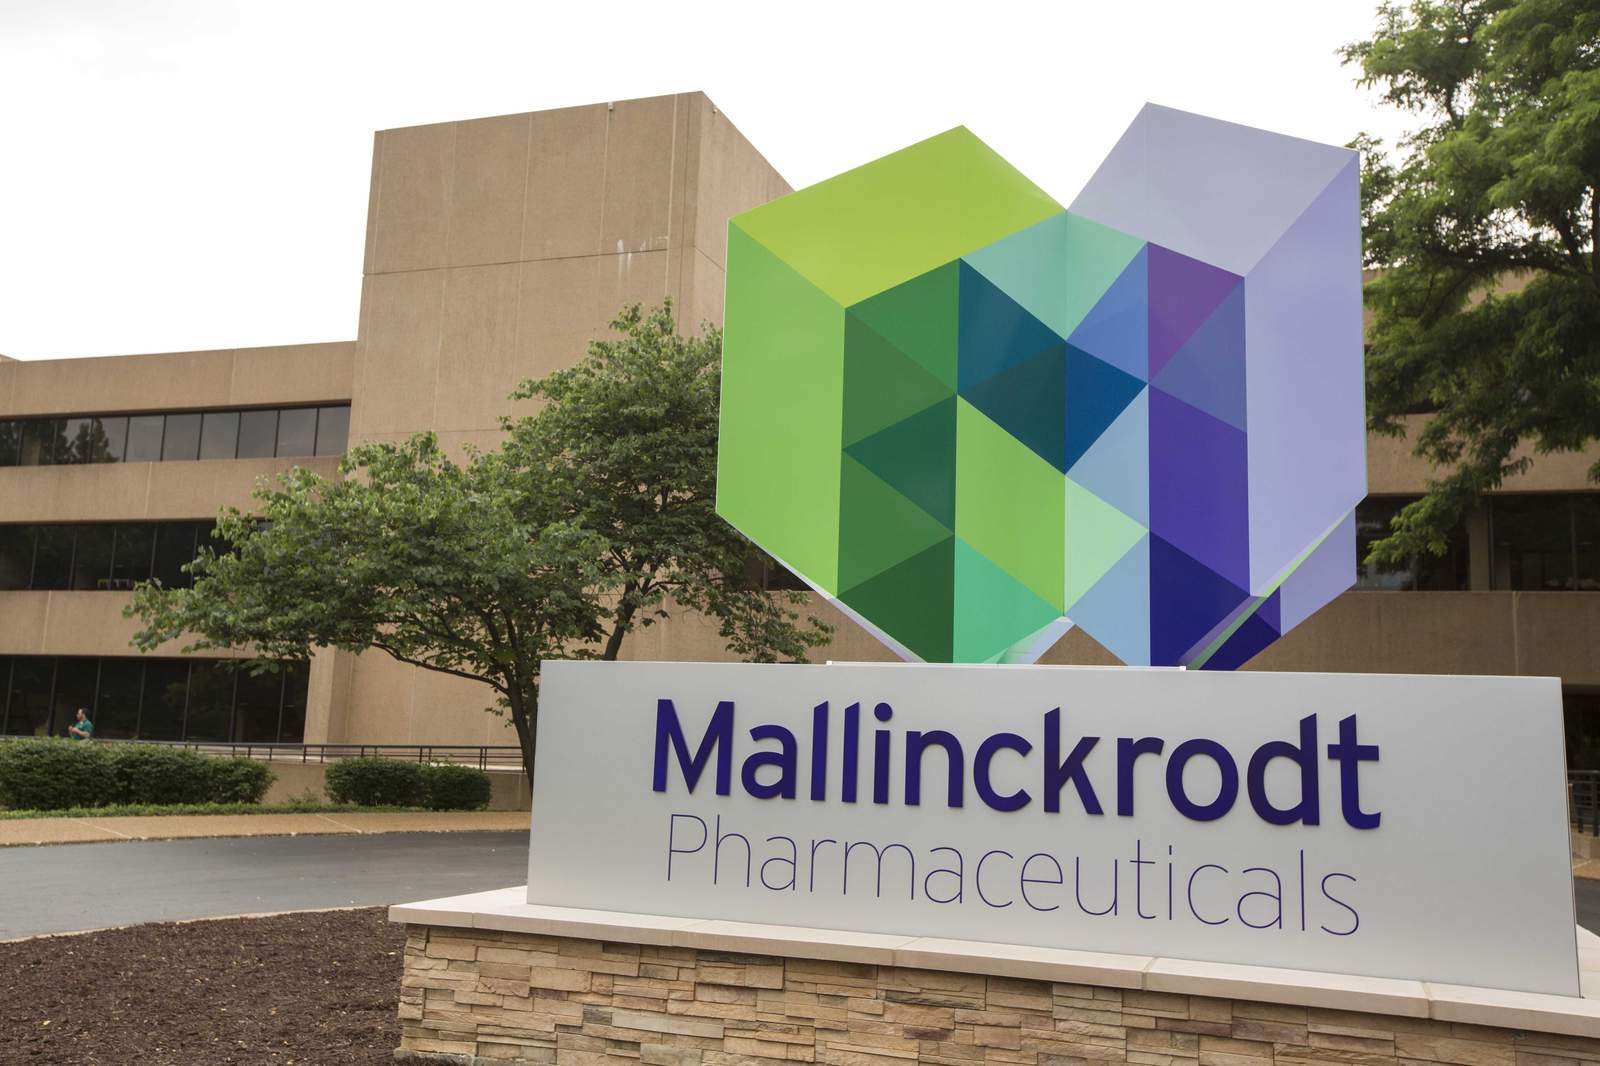 Mallinckrodt, ensnared in opioid crisis, seeks Chapter 11